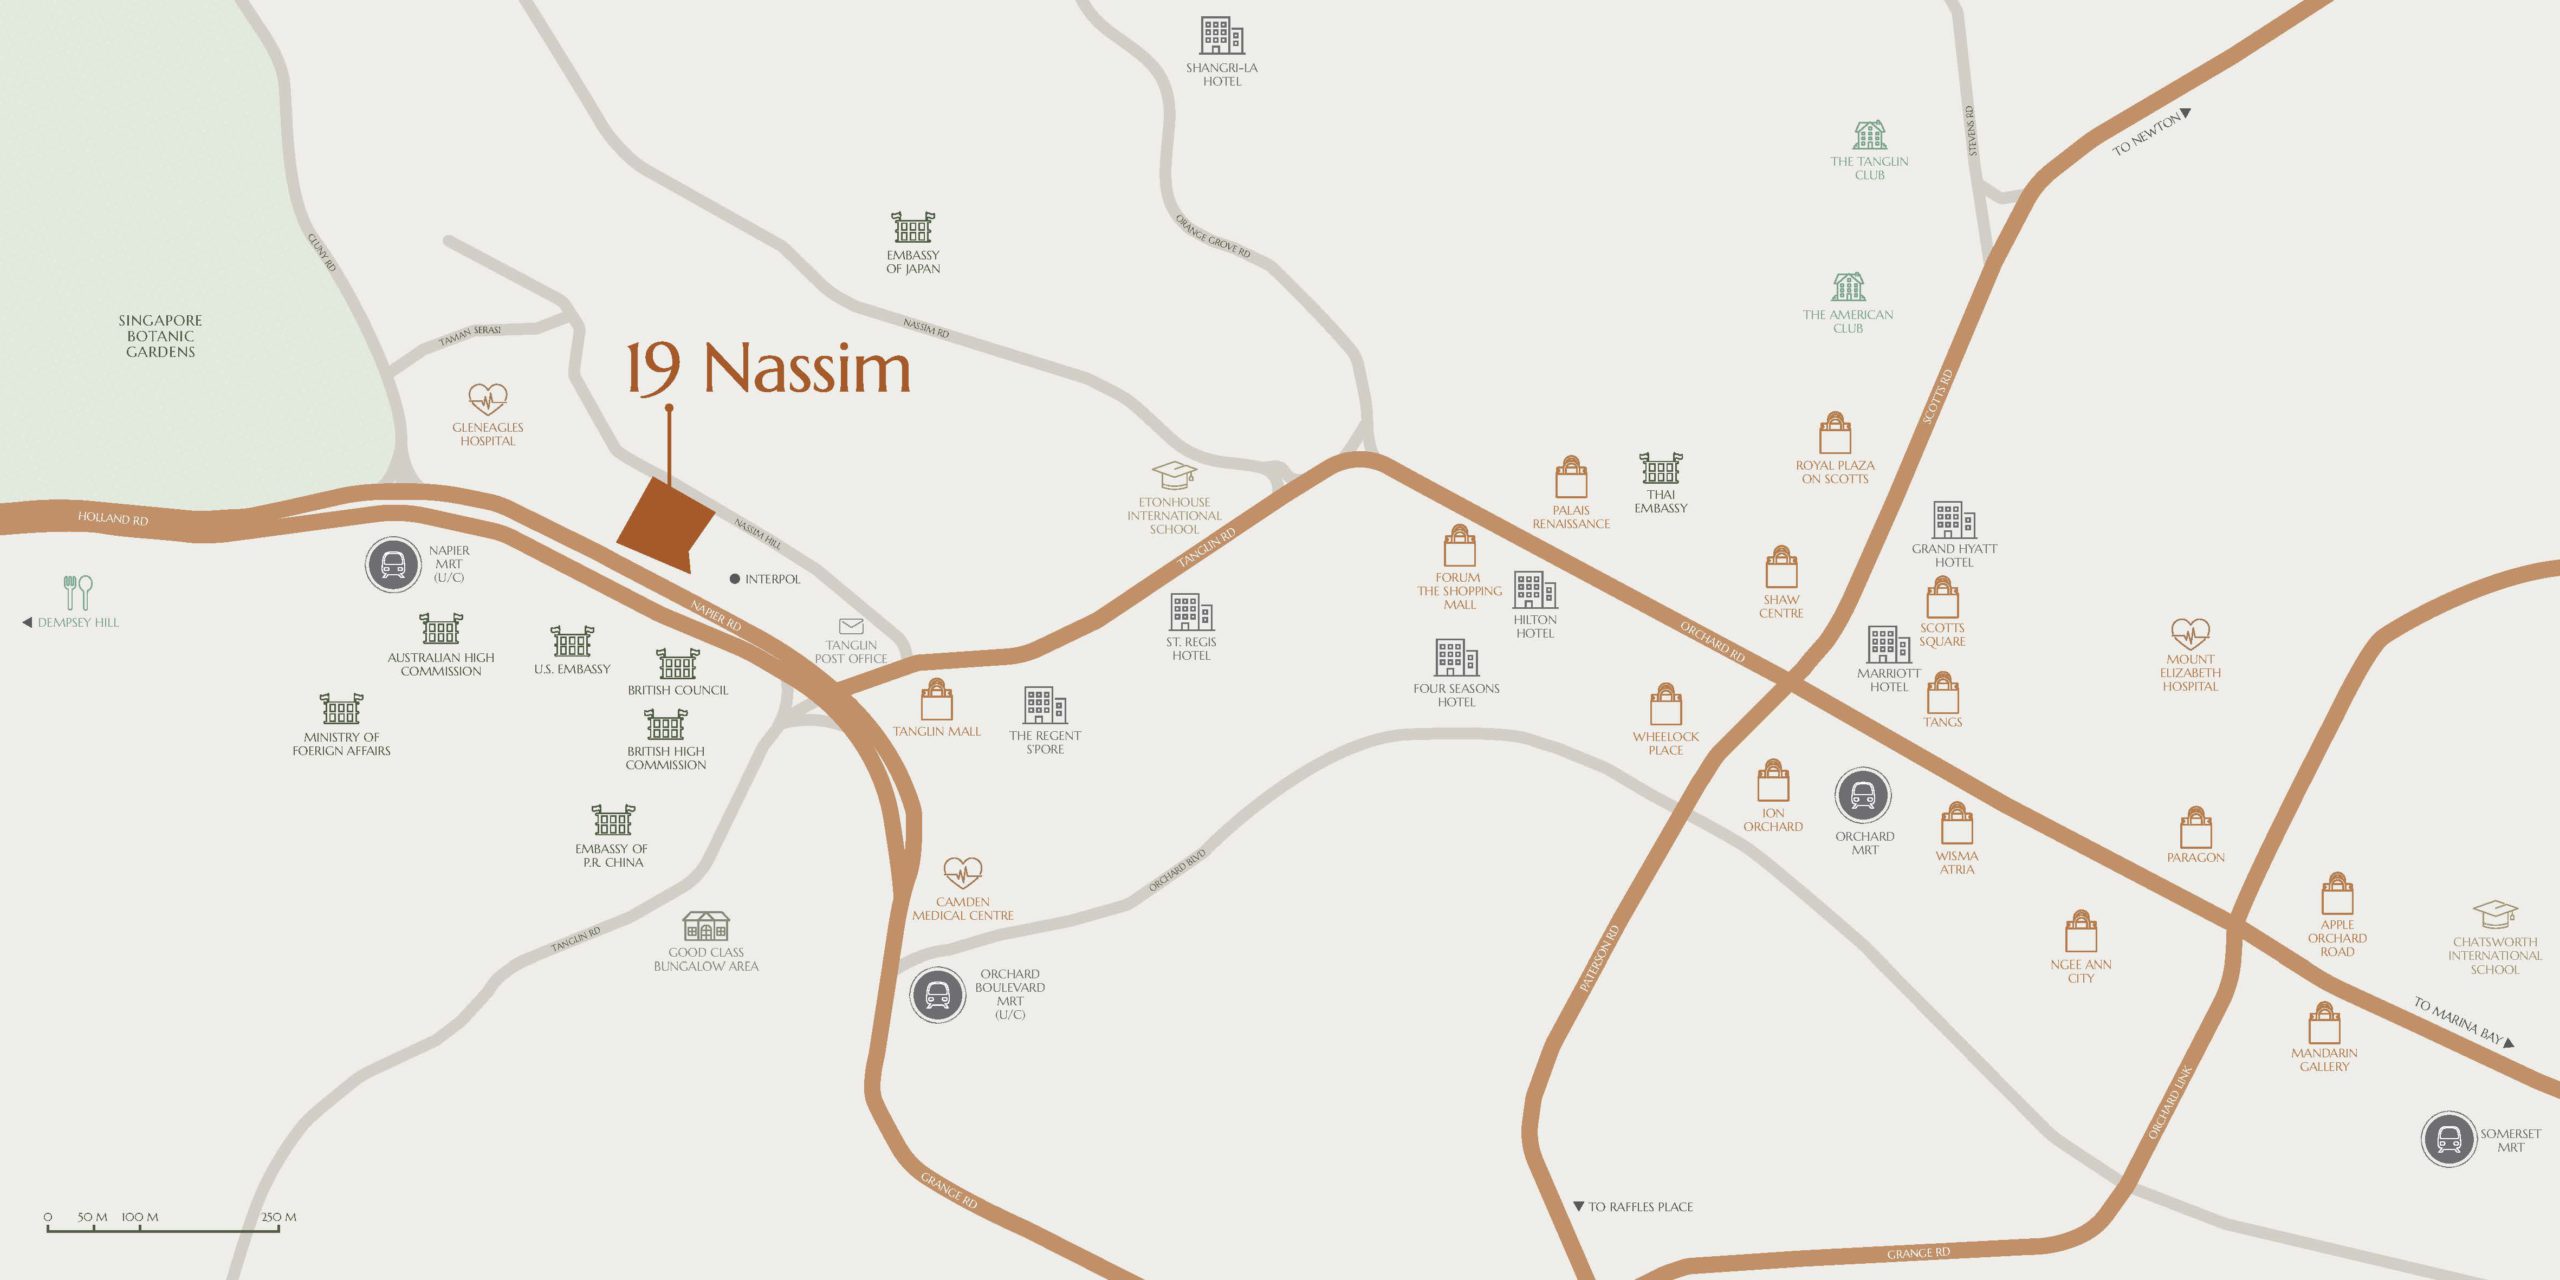 19 Nassim Location Map